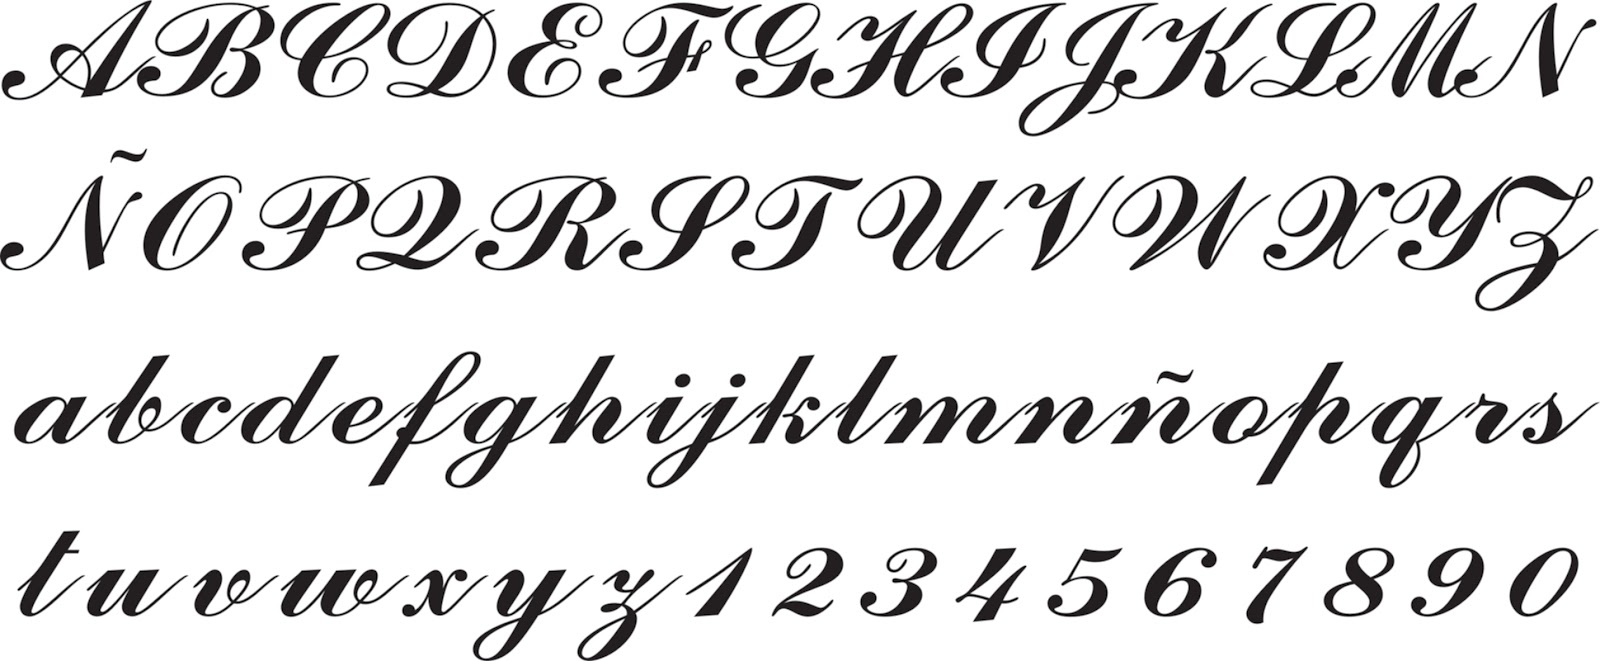 Abecedario tipografia cursiva - Imagui